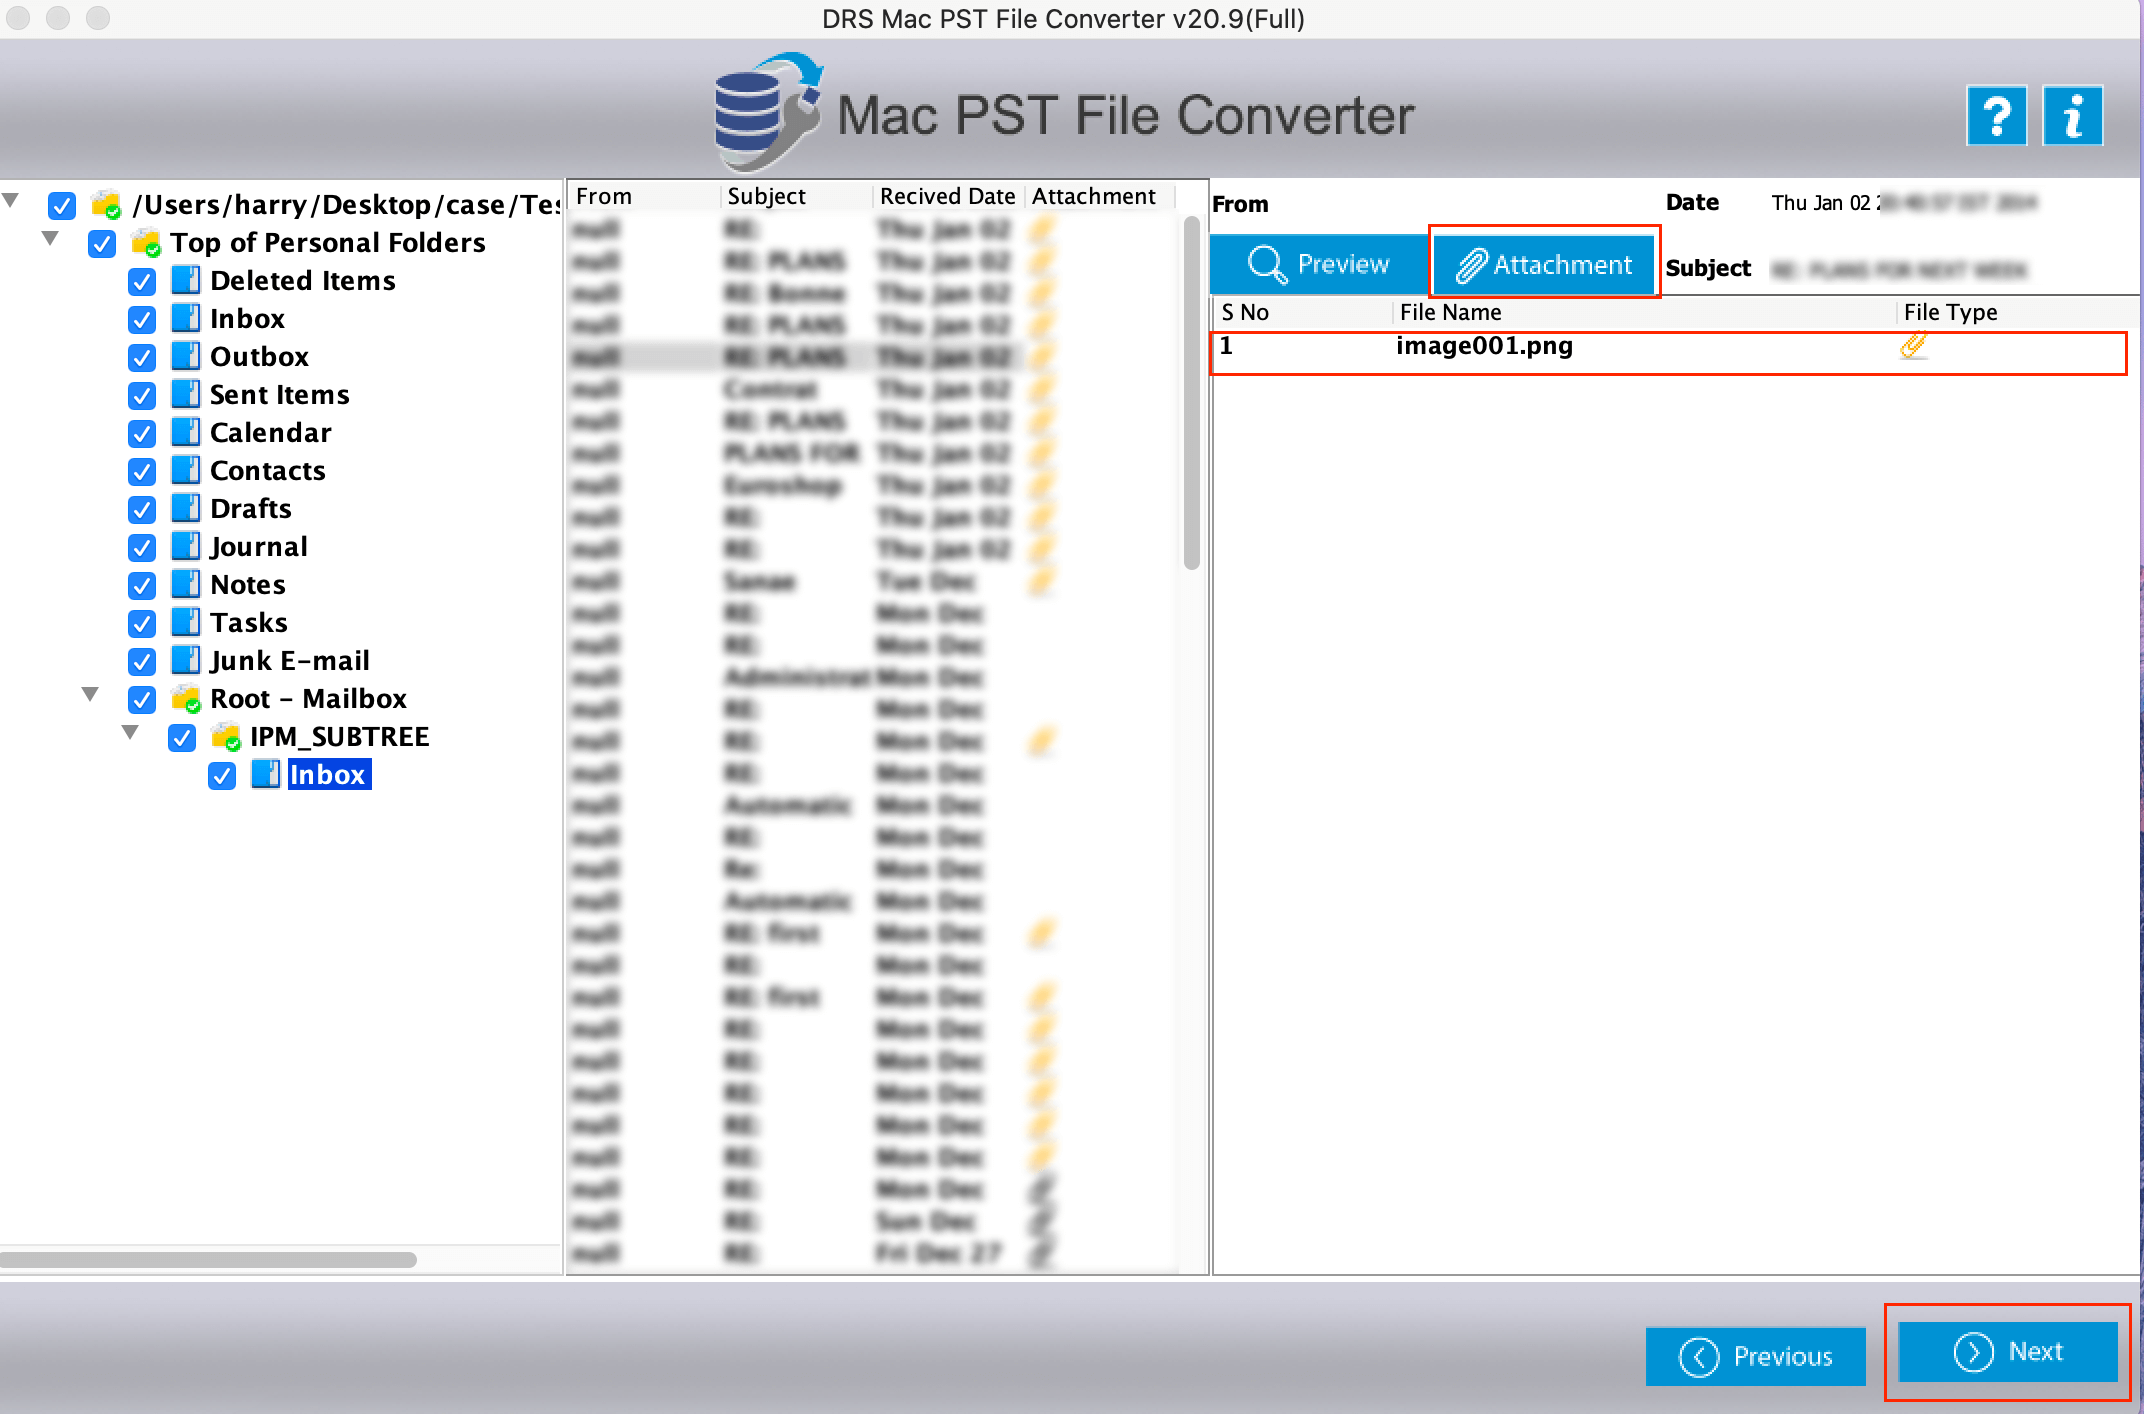 DRS PST File Converter For Mac 20.9 : Main Window